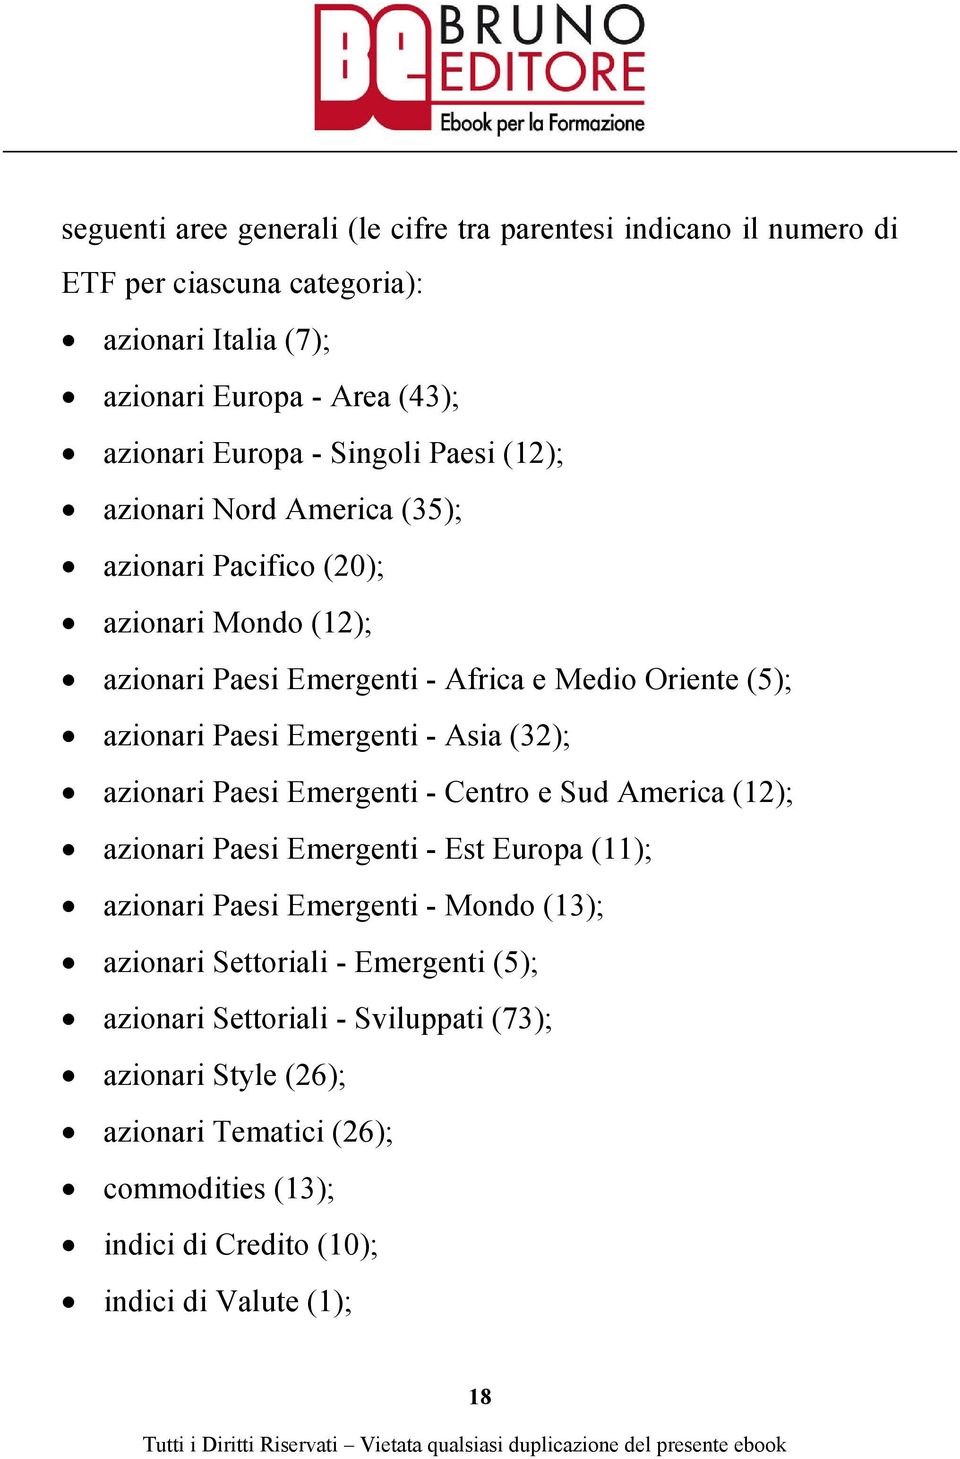 Emergenti - Asia (32); azionari Paesi Emergenti - Centro e Sud America (12); azionari Paesi Emergenti - Est Europa (11); azionari Paesi Emergenti - Mondo (13); azionari